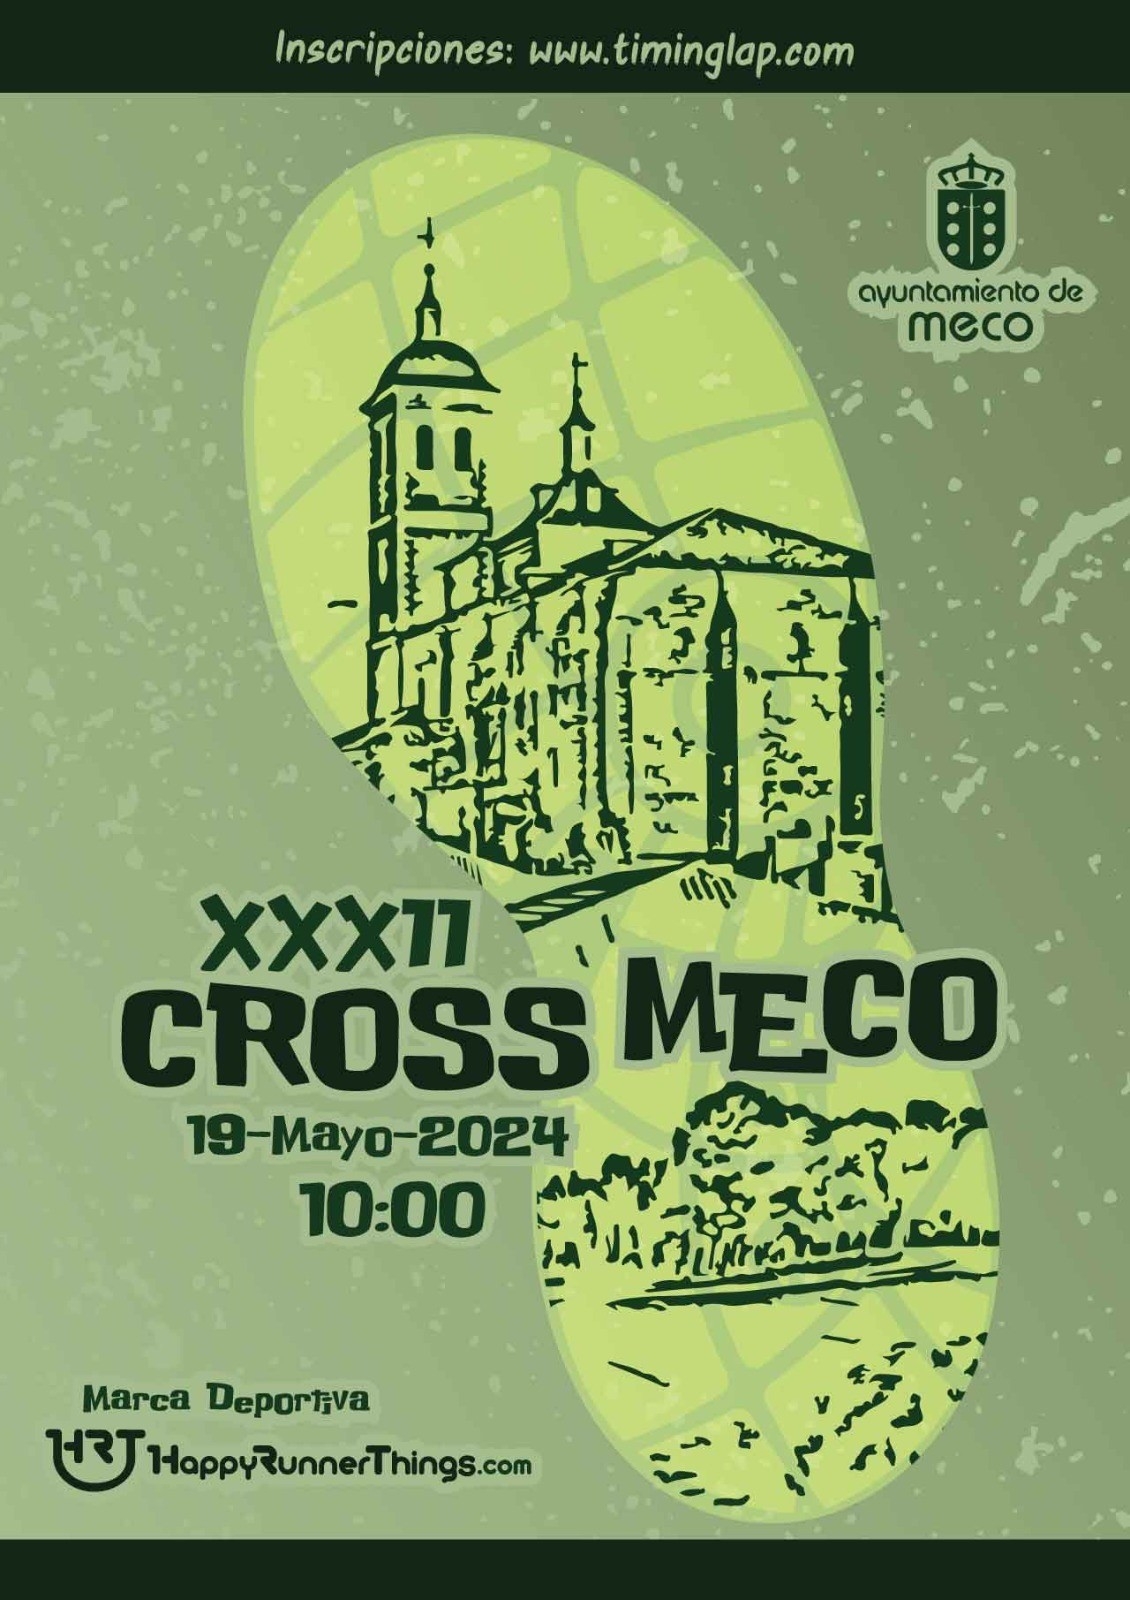 XXXII CROSS VILLA DE MECO - Inscríbete